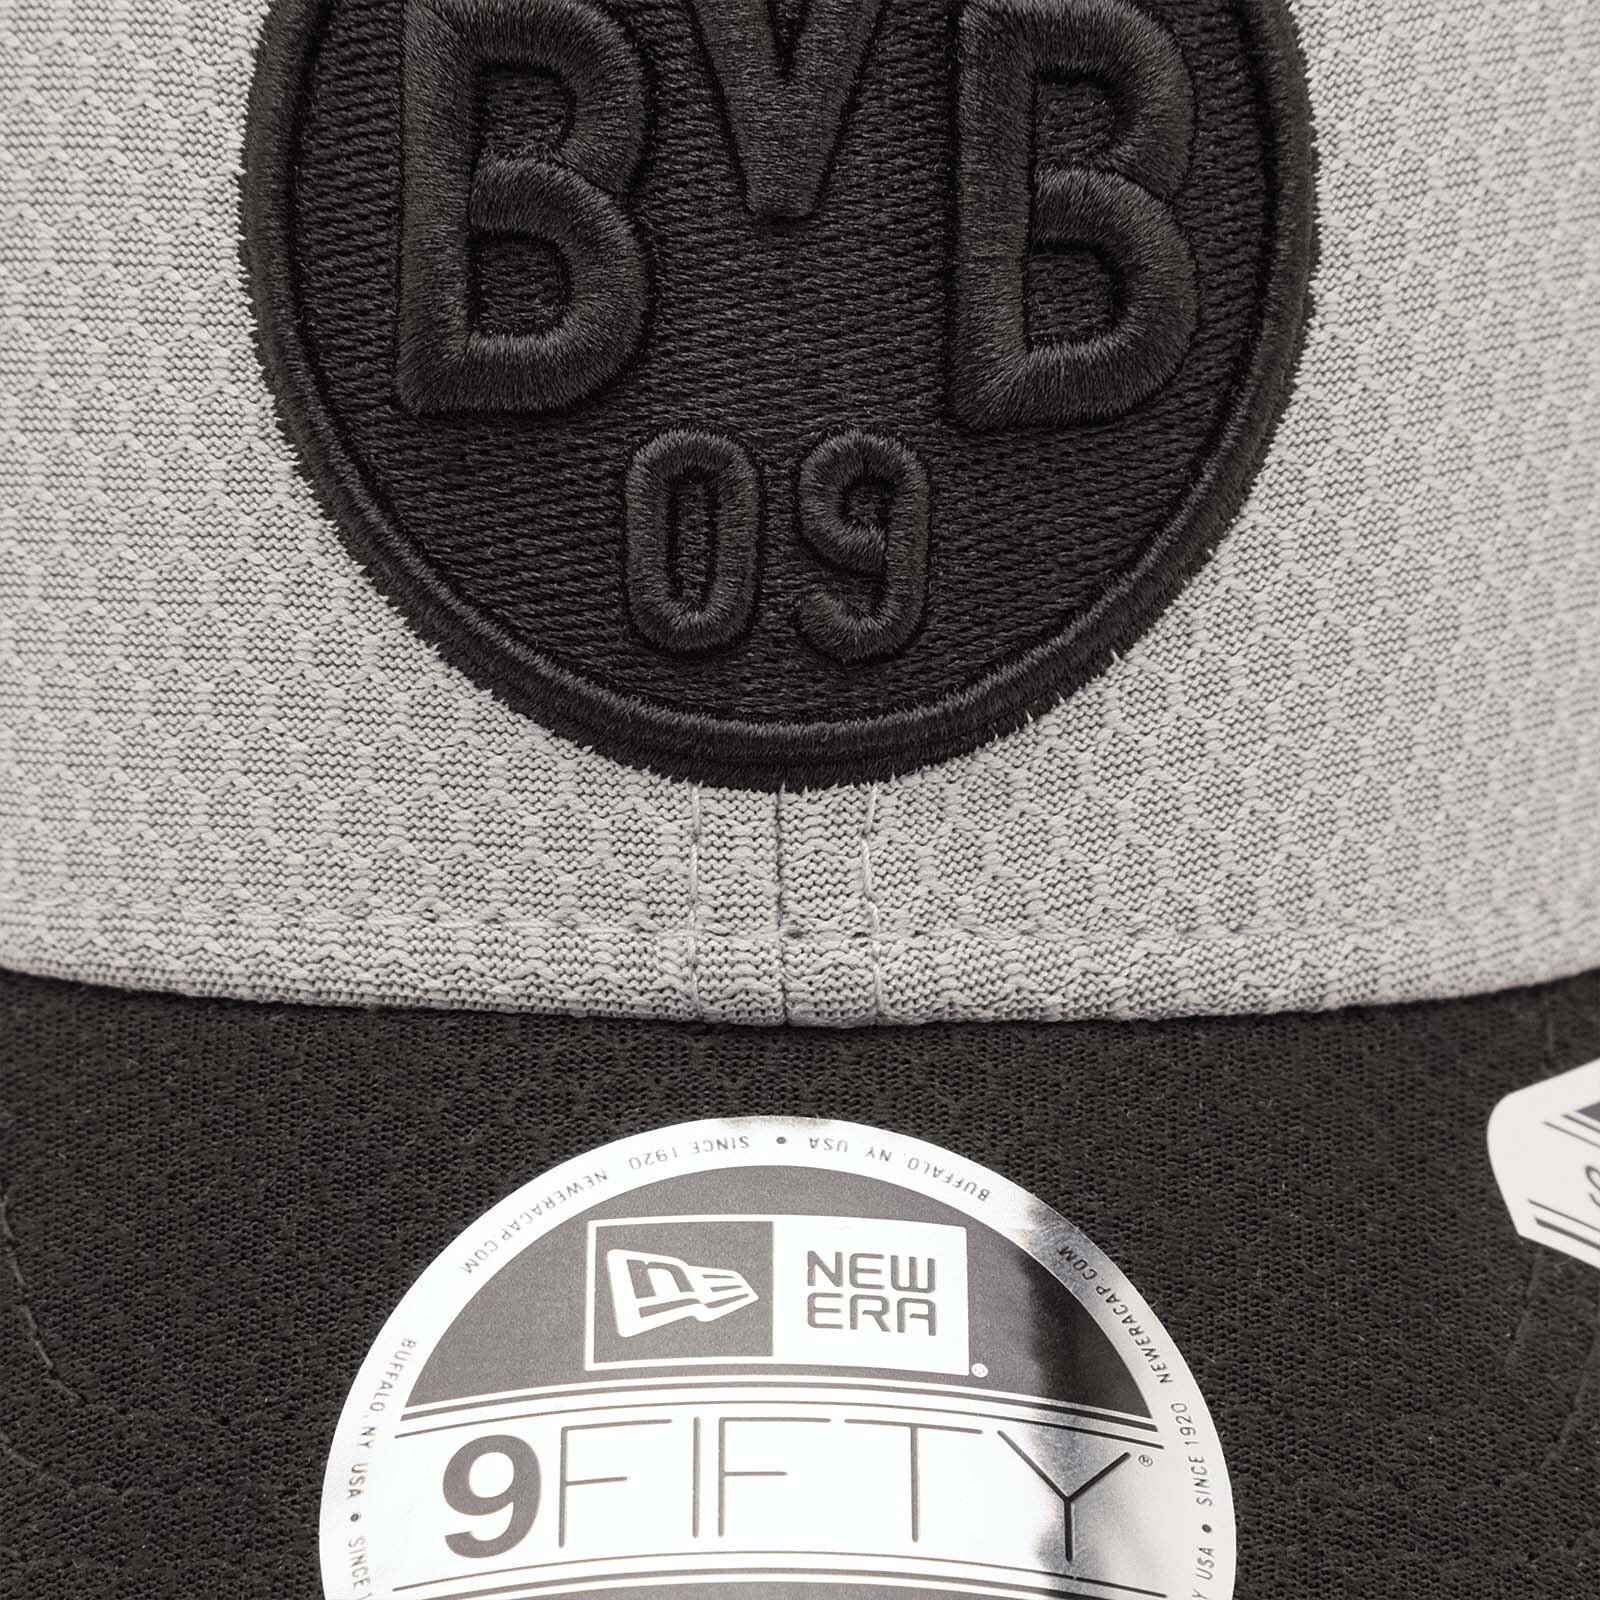 Era New (1-St) Cap Snap 9Fifty Stretch grau/schwarz Cap BVB BVB Baseball